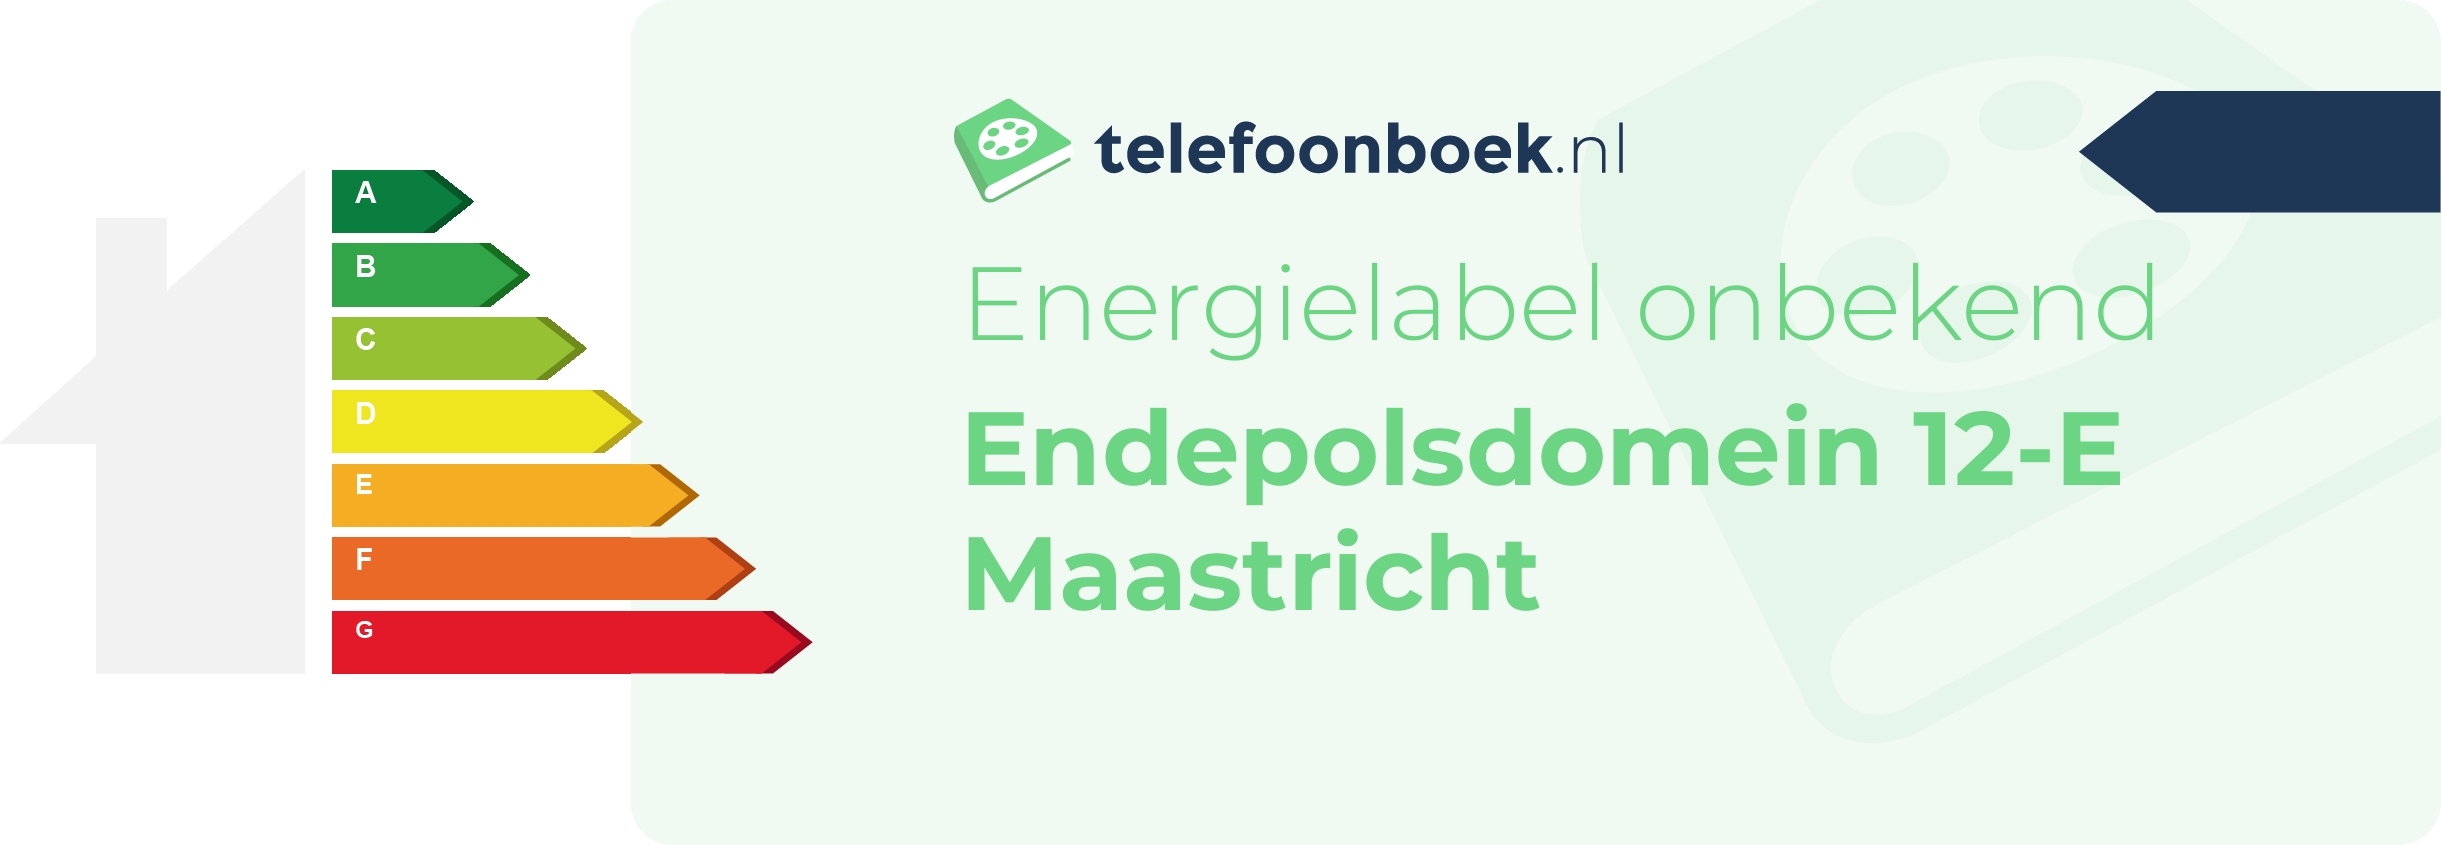 Energielabel Endepolsdomein 12-E Maastricht